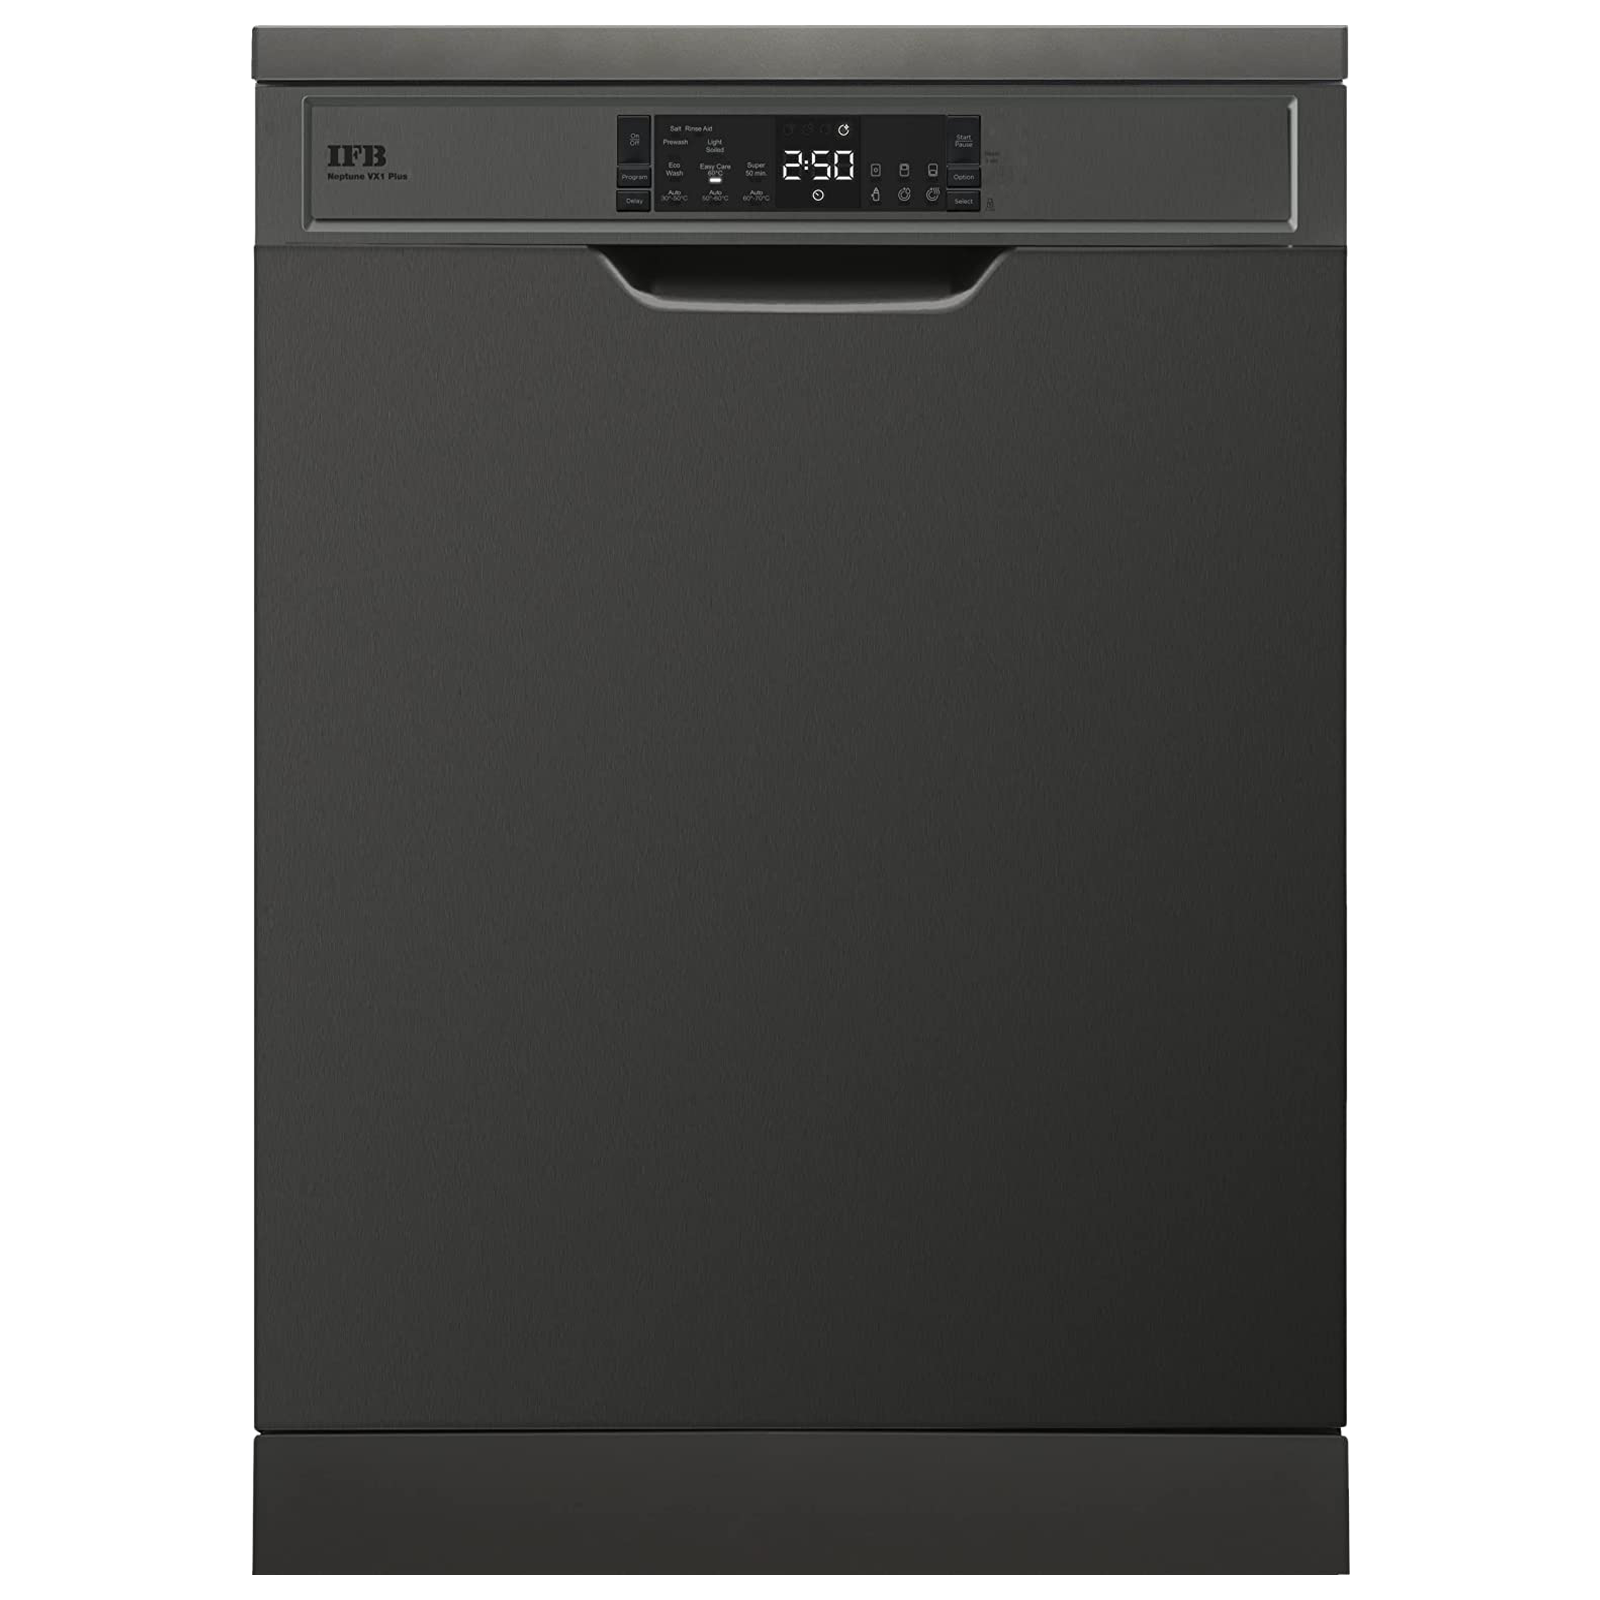 IFB Neptune VX1 Plus 15 Place Setting Freestanding Dishwasher (Graphite Grey)_1